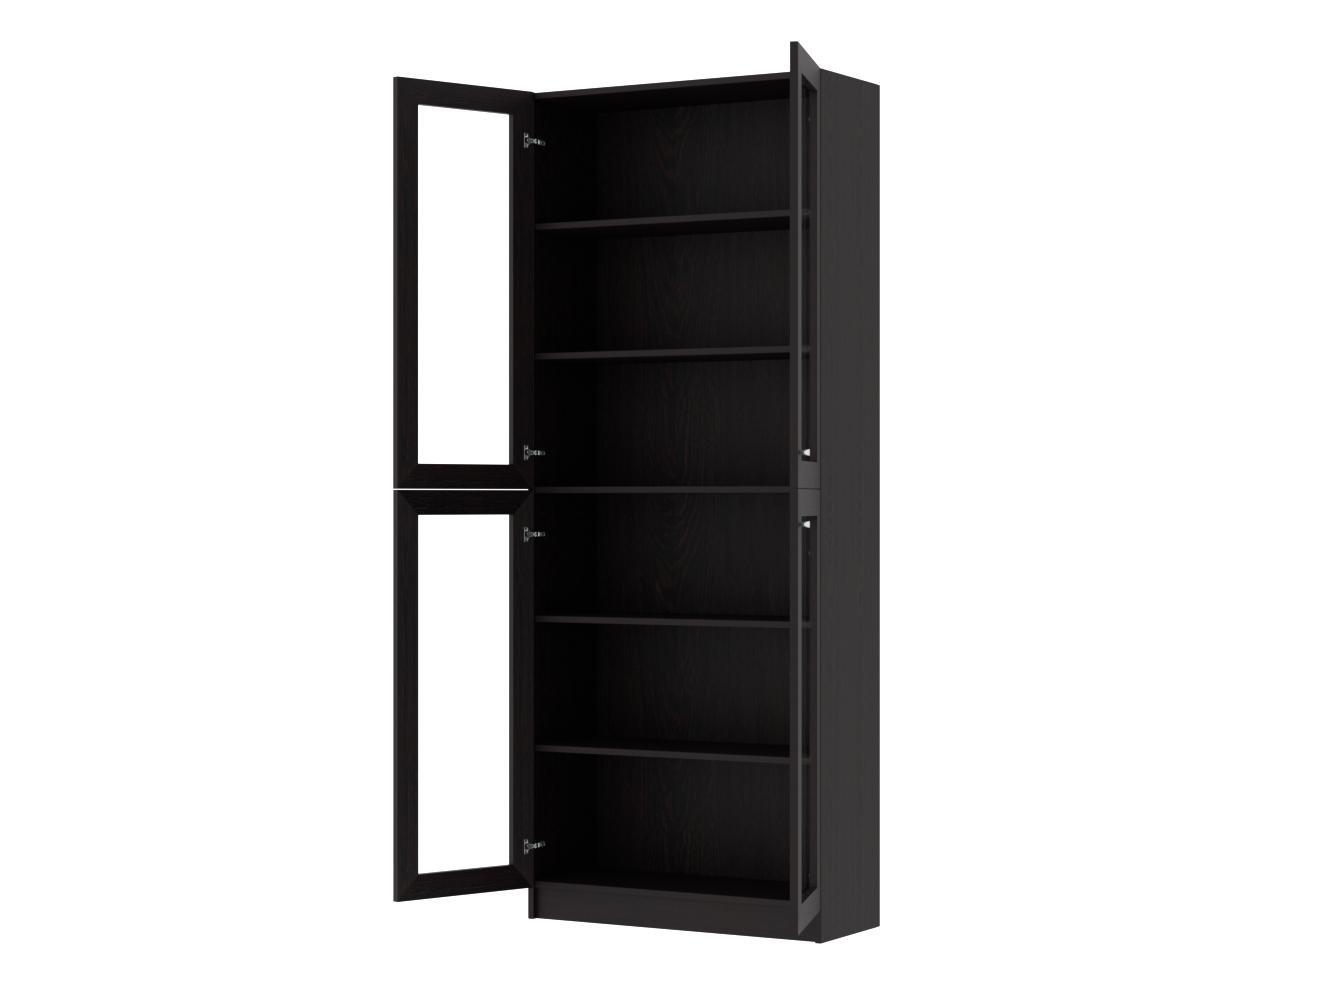 Книжный шкаф Билли 335 wenge tsava ИКЕА (IKEA) изображение товара